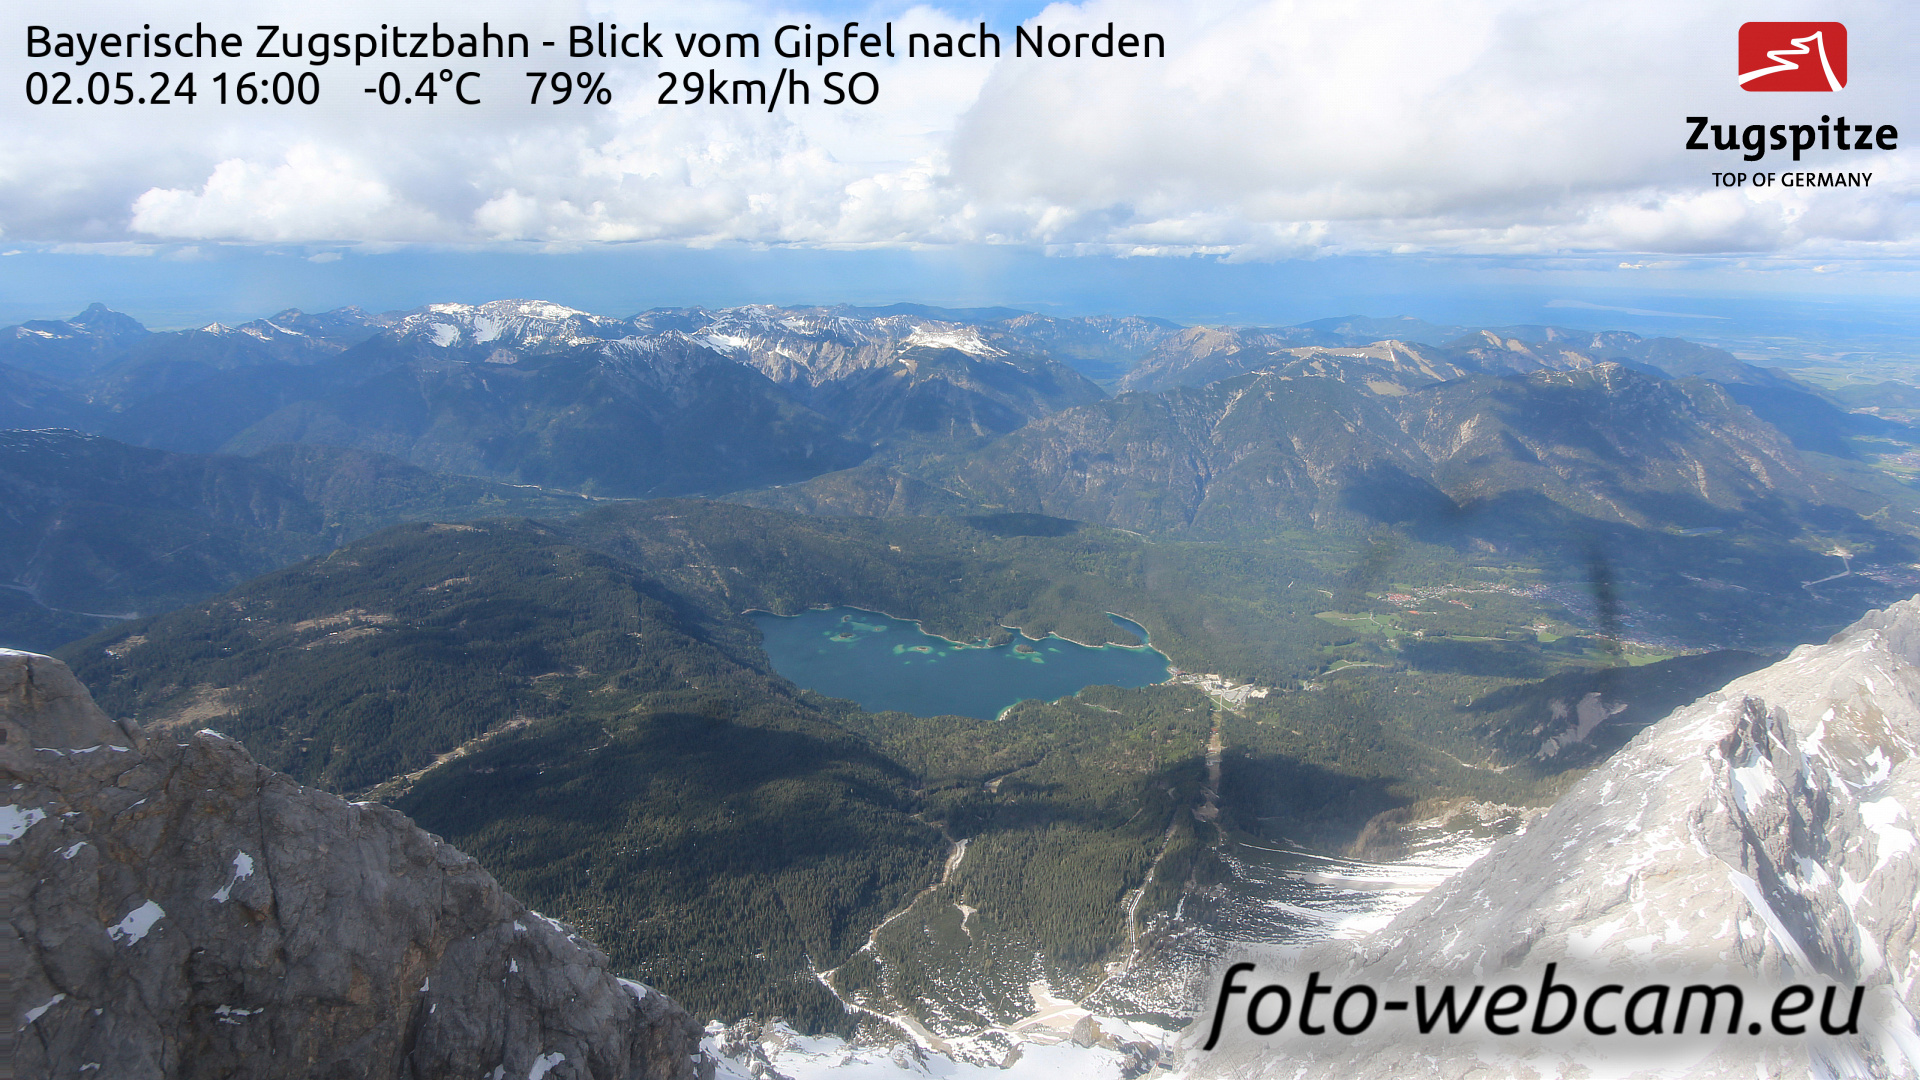 Zugspitze Sun. 16:06